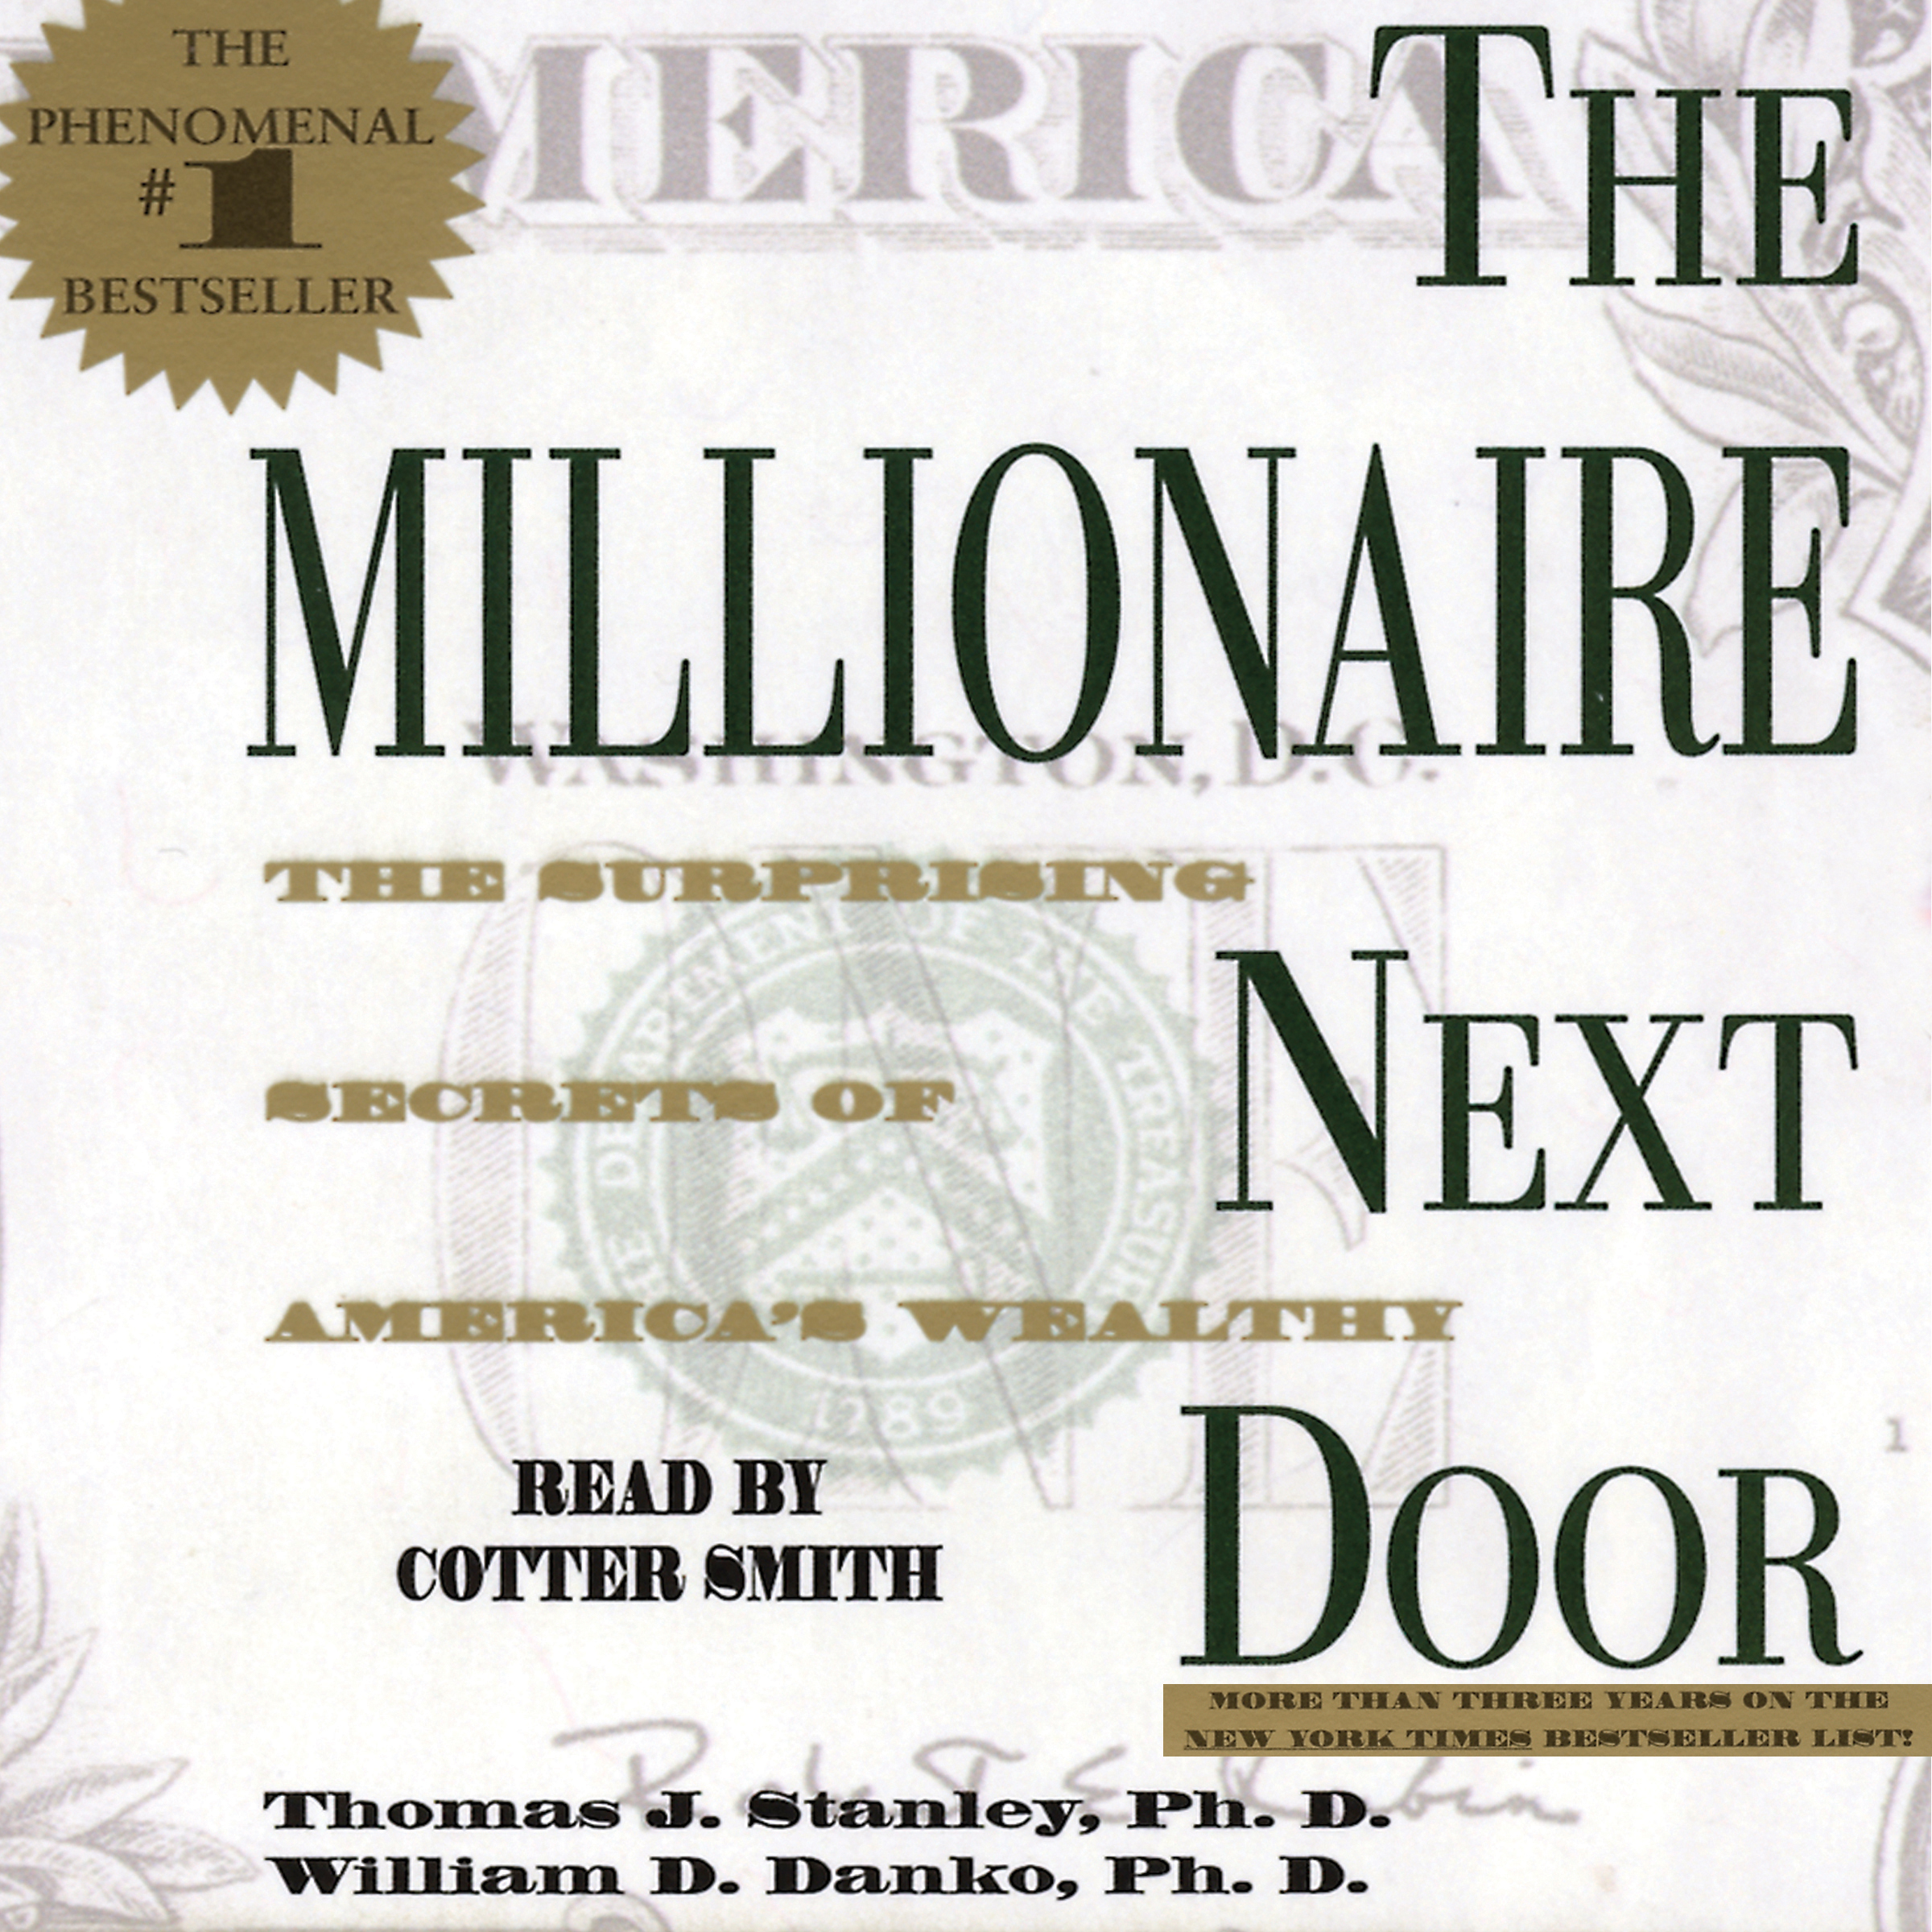 The Millionaire Fastlane Audiobook